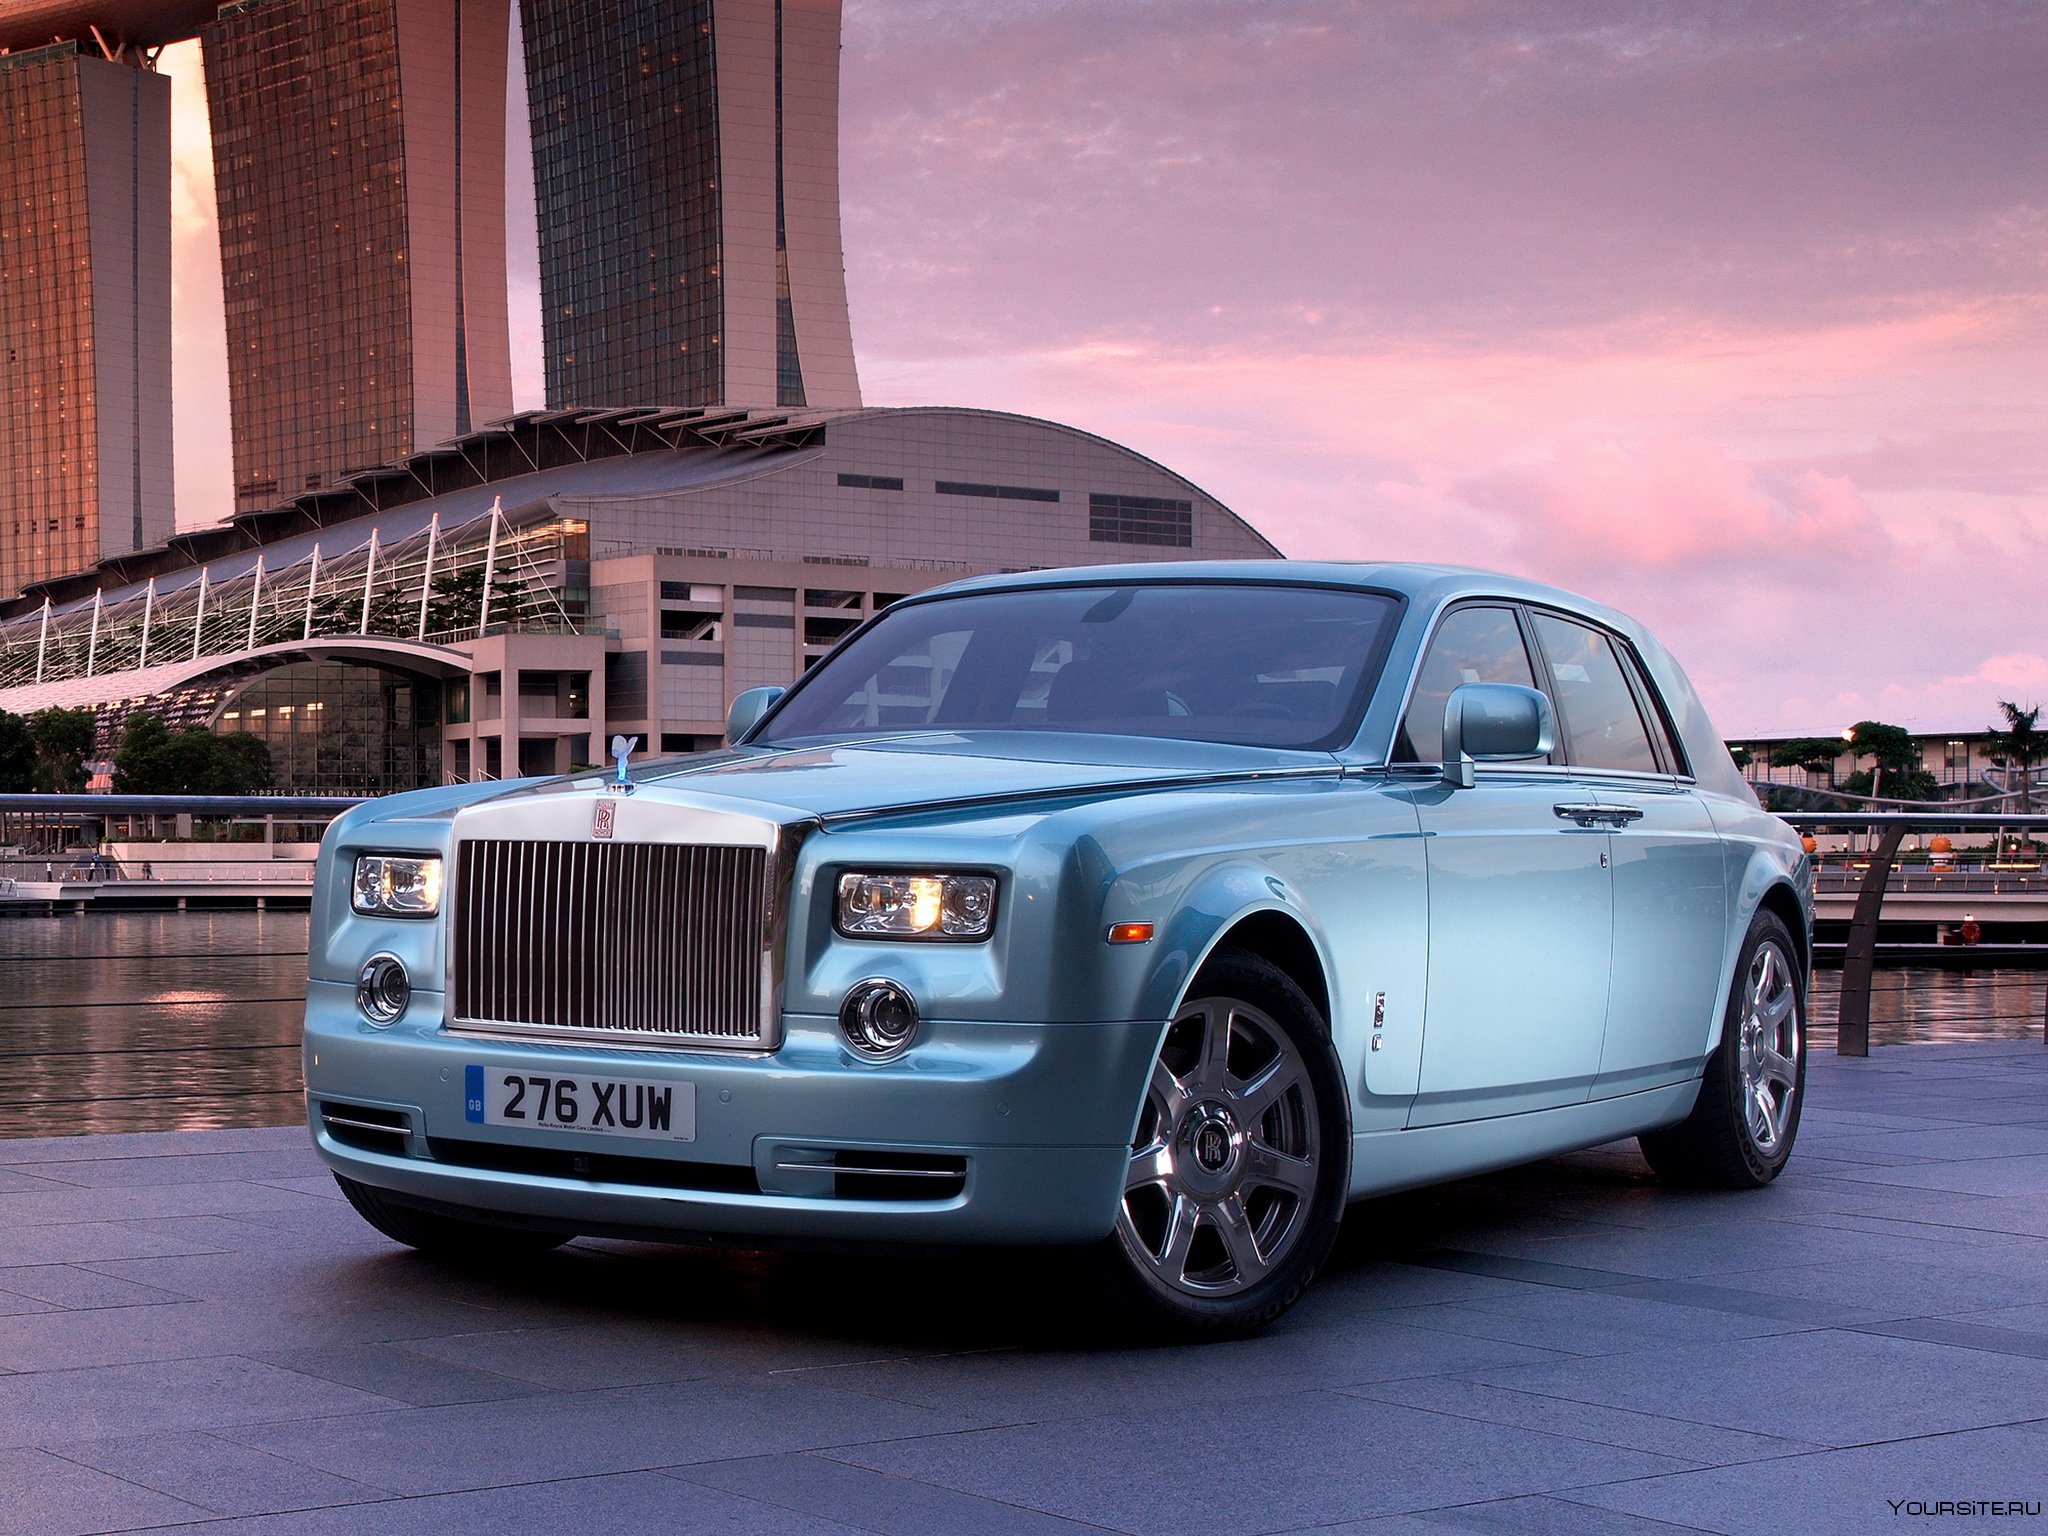 Rolls com. Rolls Royce. Машина Роллс Ройс. Rolls Royce Phantom. Rolls-Royce 102ex.